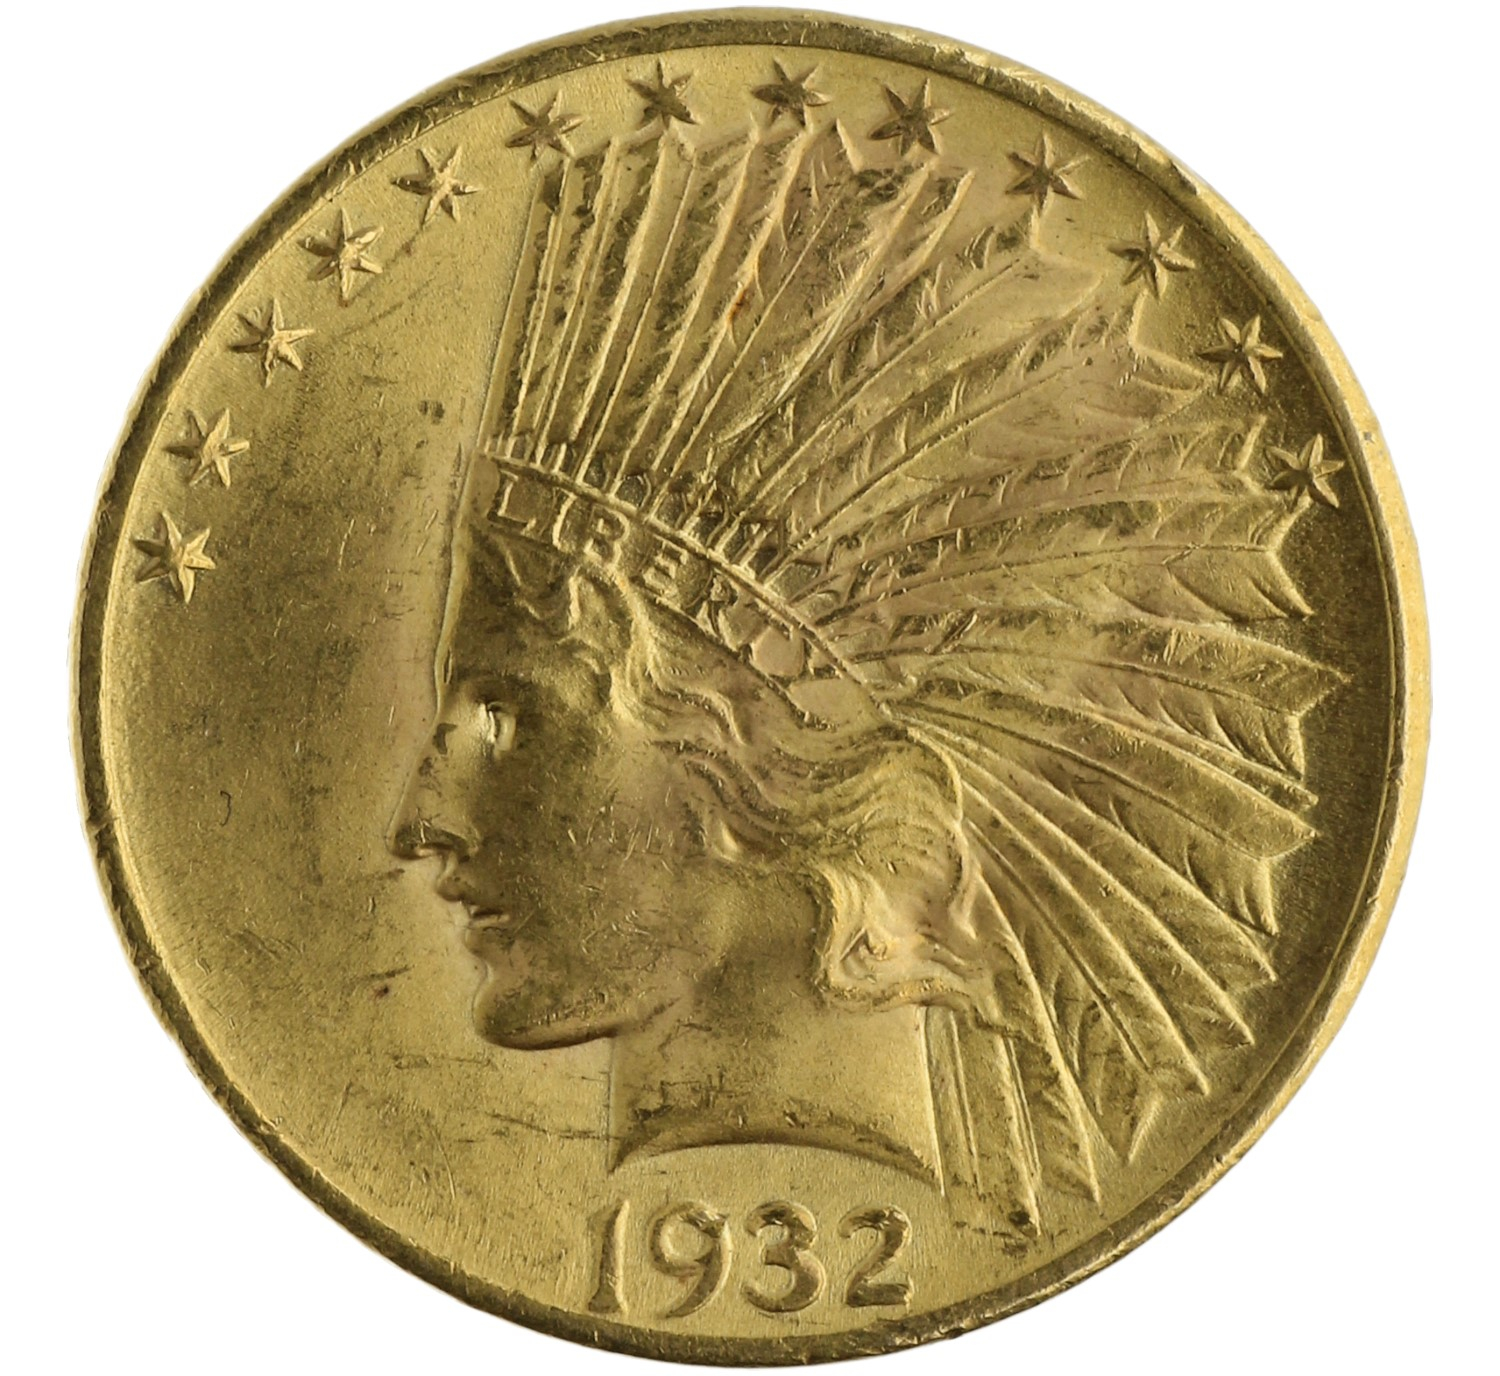 10 Dollars - USA - 1932